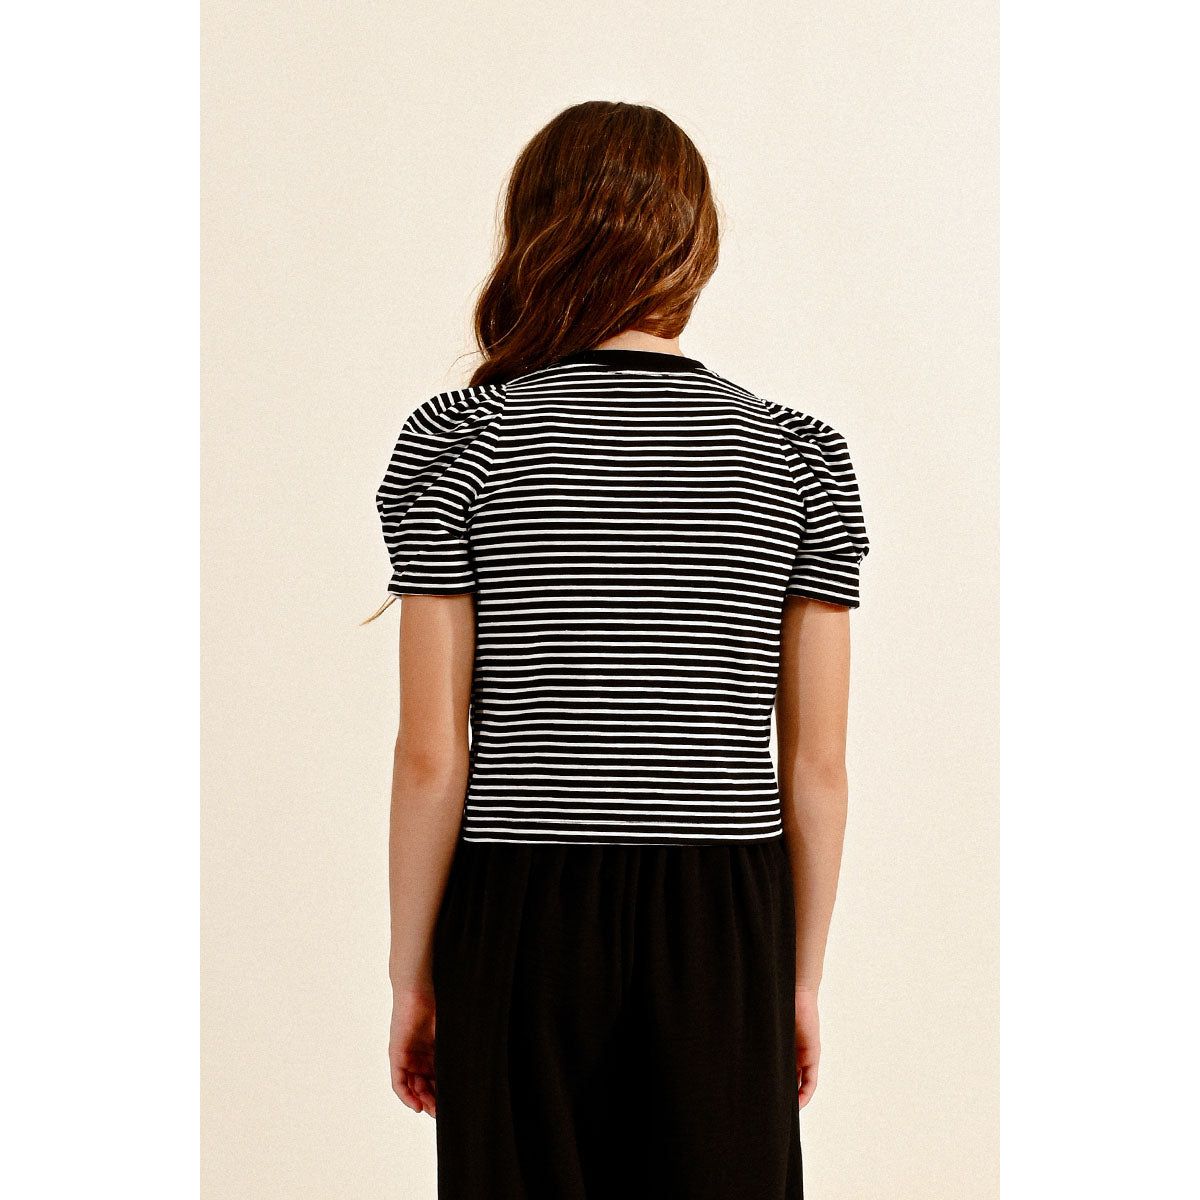 Molly Bracken - Knitted Top in Black/White Stripe